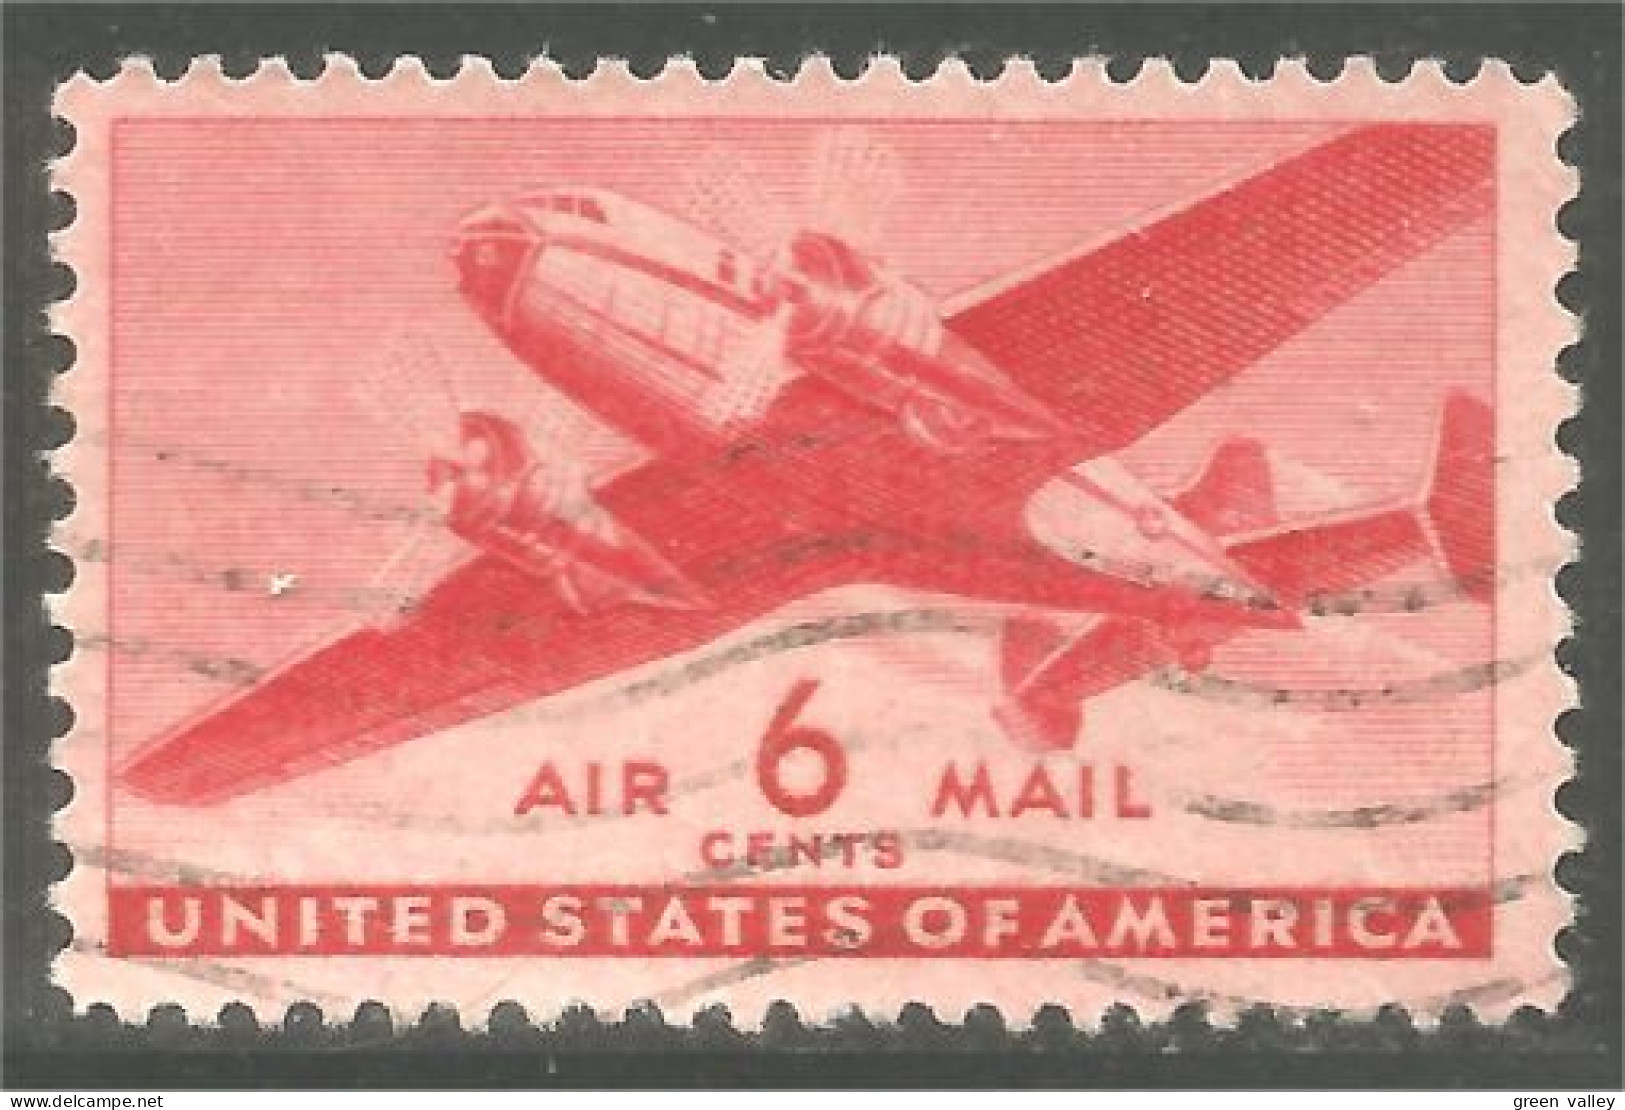 XW01-0617 USA 1941 Twin-Motored Transport Plane 6c Avion Airplane - 2a. 1941-1960 Afgestempeld